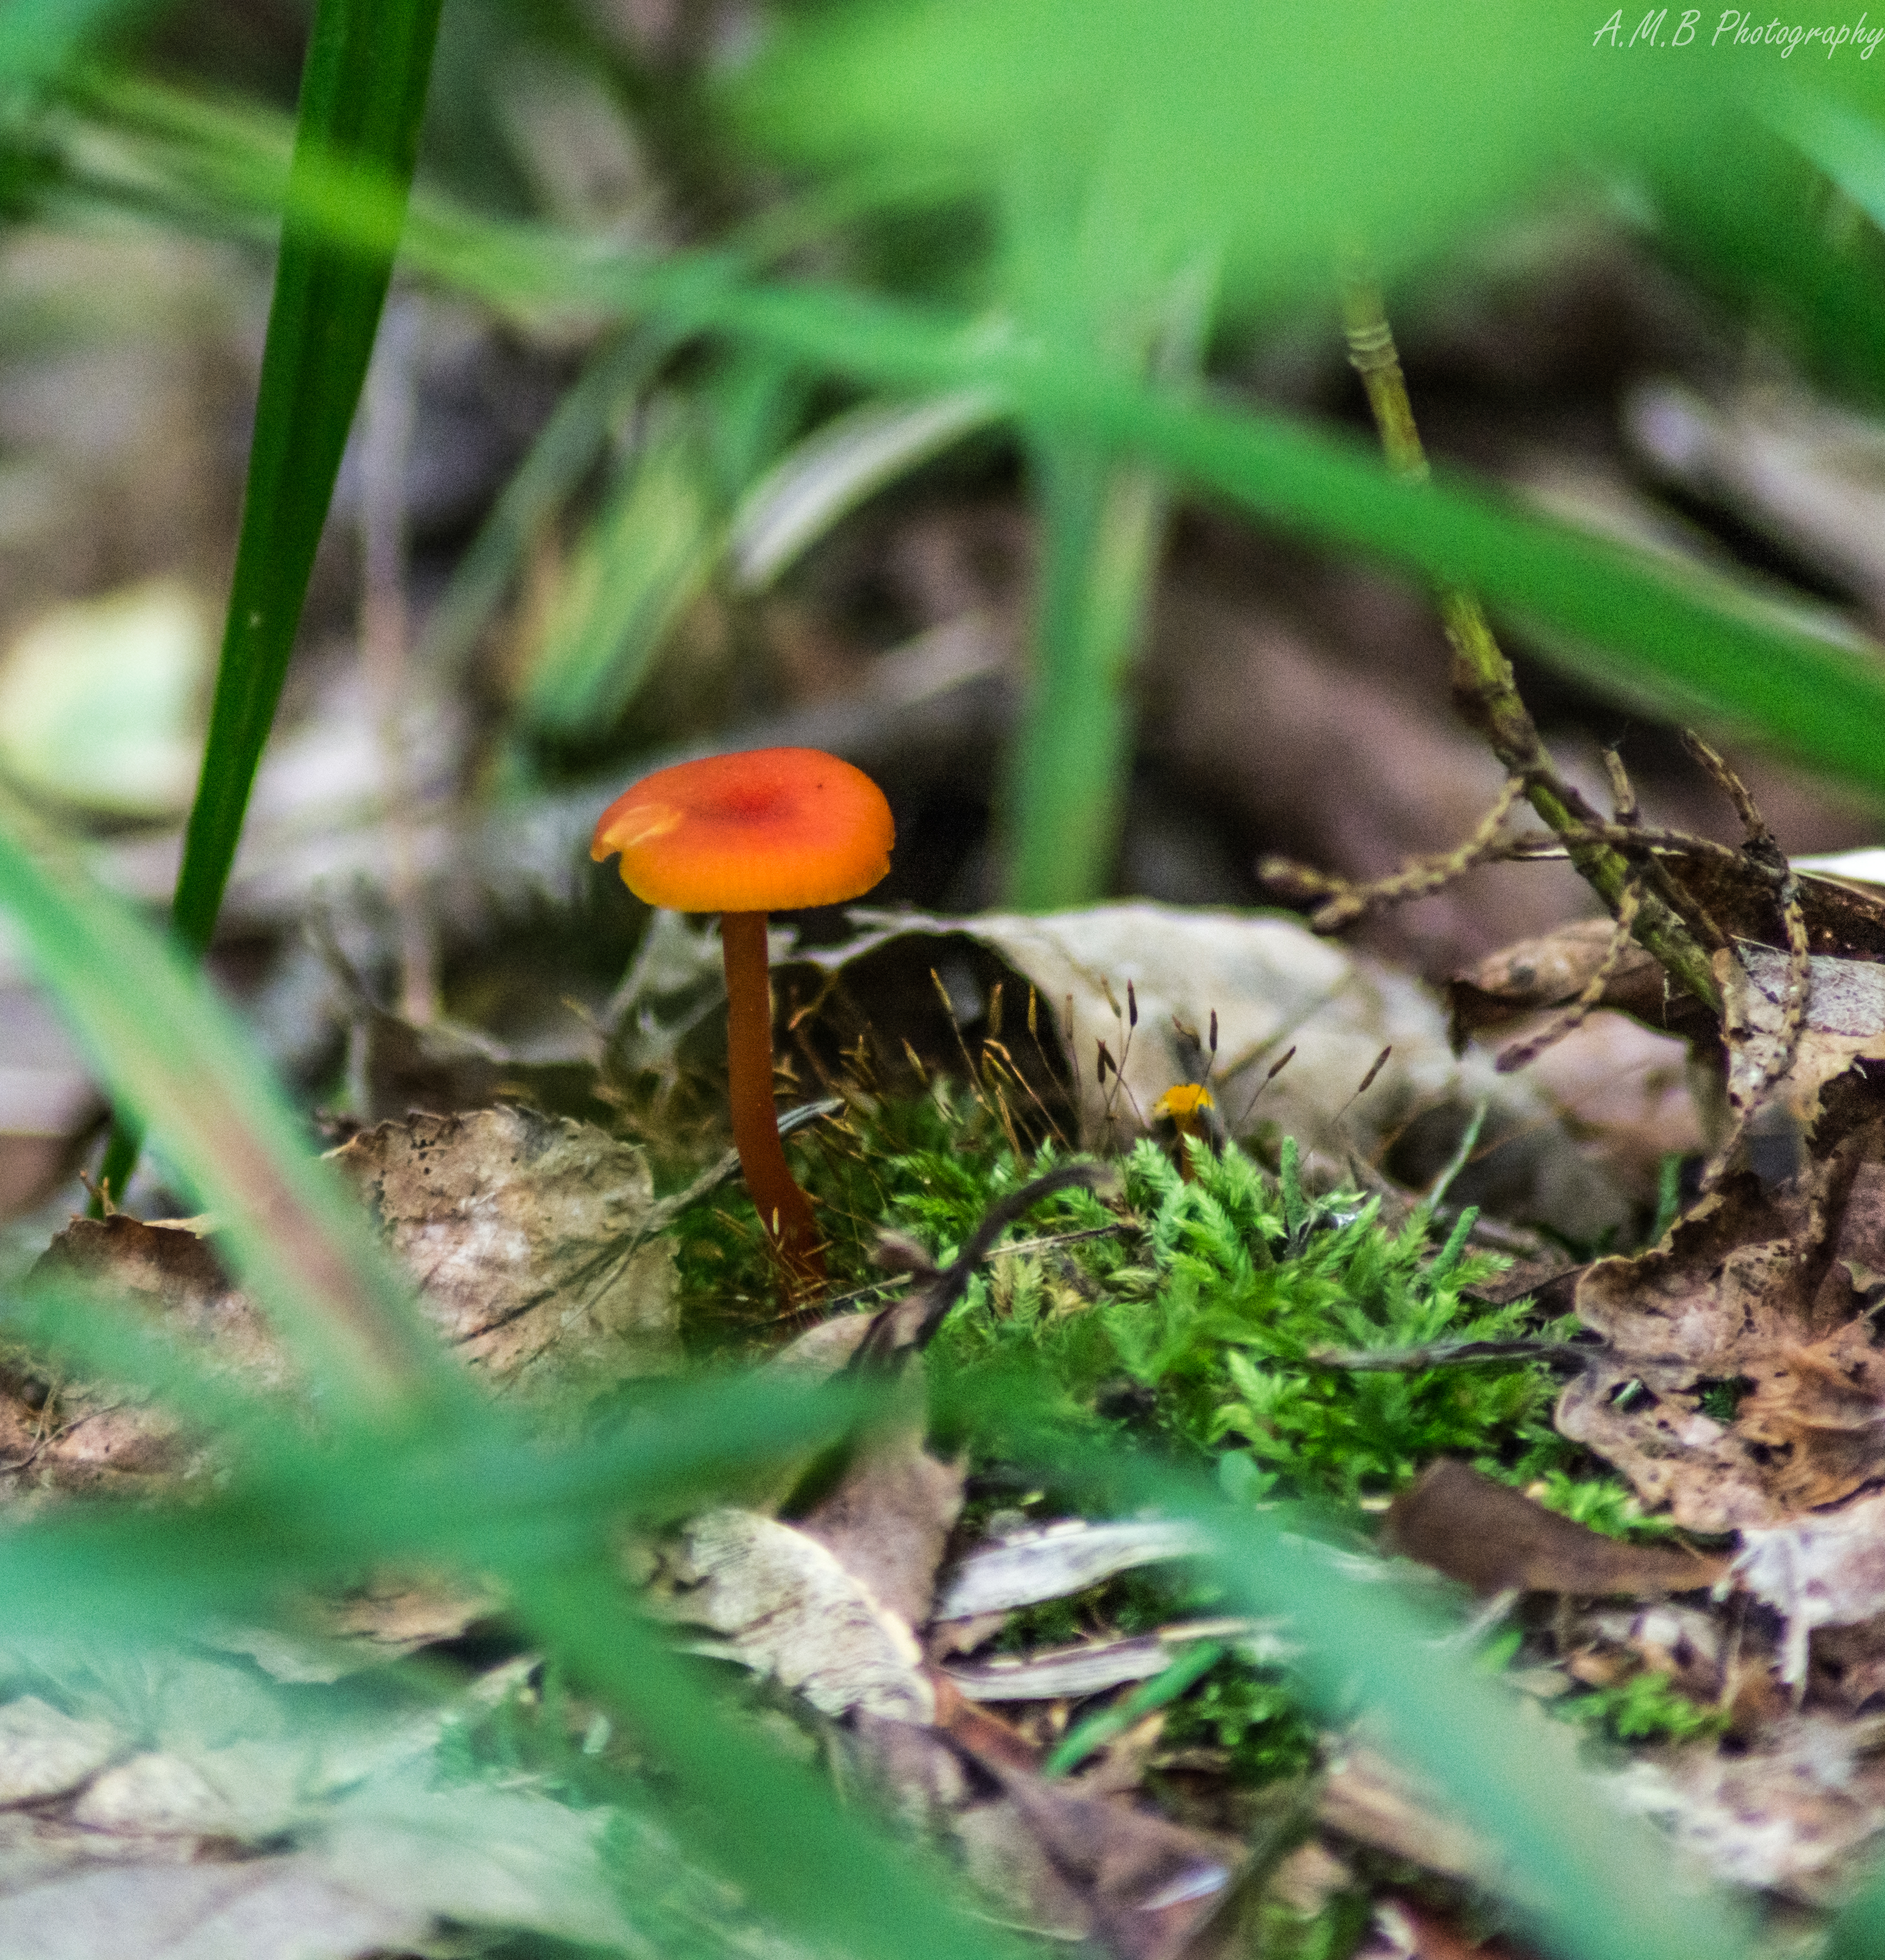 Tiny Orange Mushroom